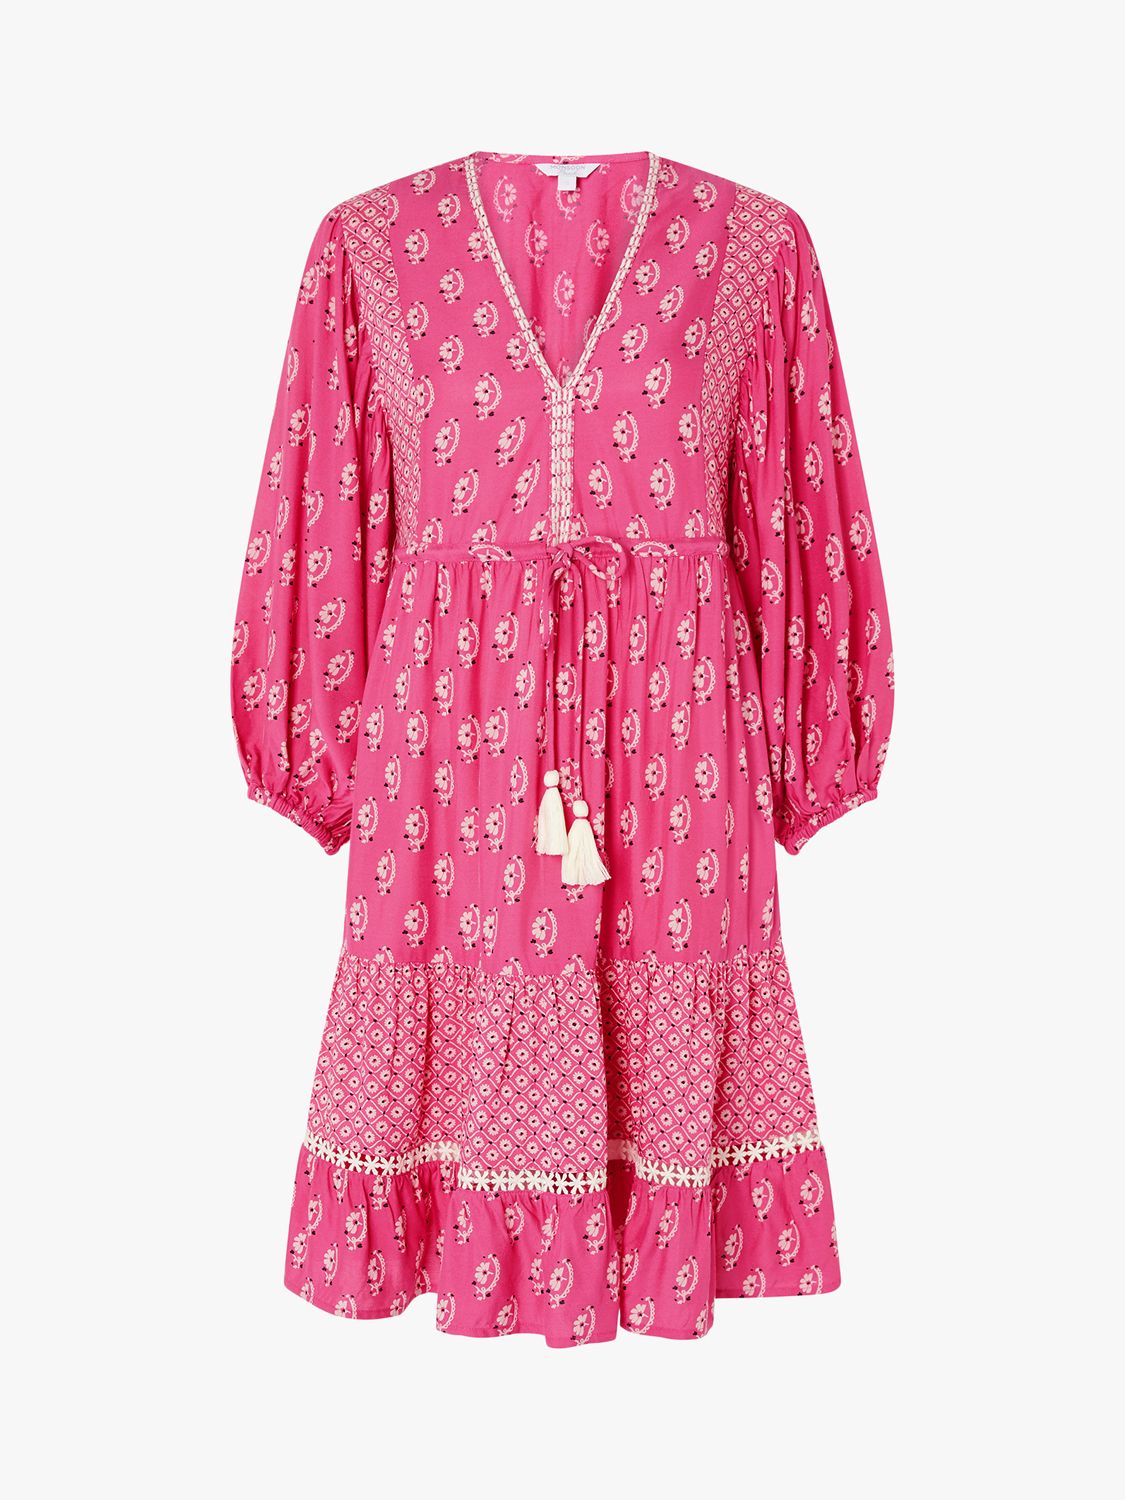 Monsoon Daisy Print Tunic Dress, Pink at John Lewis & Partners